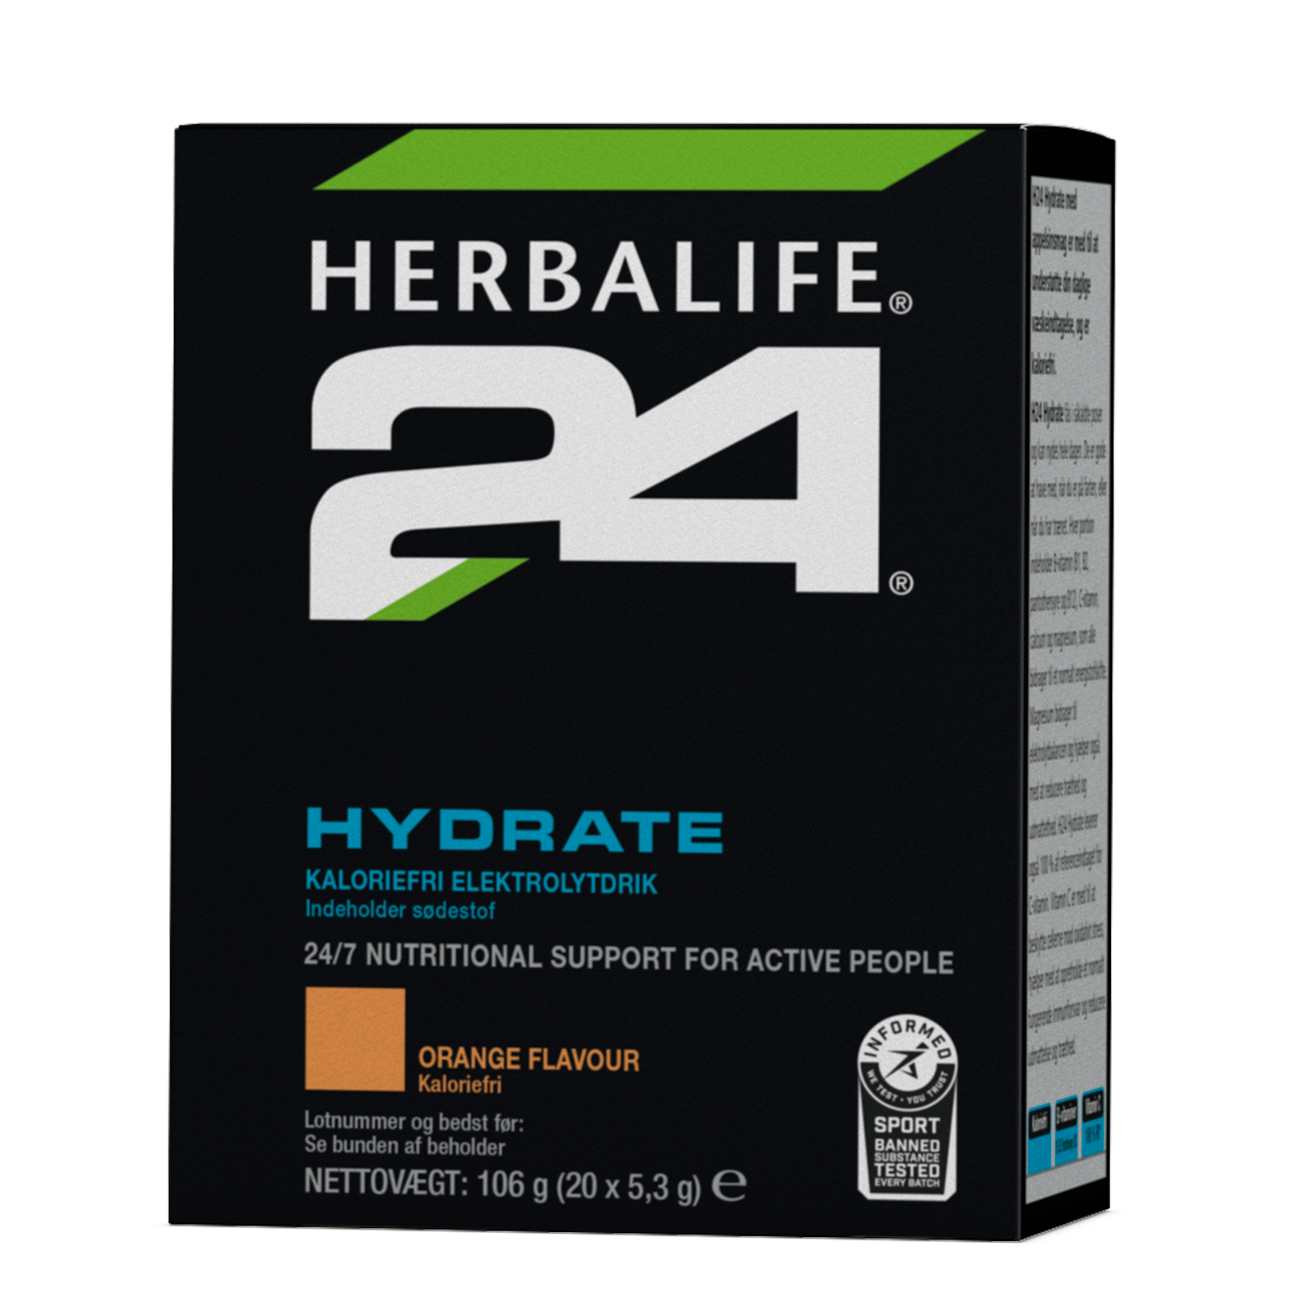 Herbalife24® er en unik kaloriefri sportsdrik for den aktive sportsudøver.